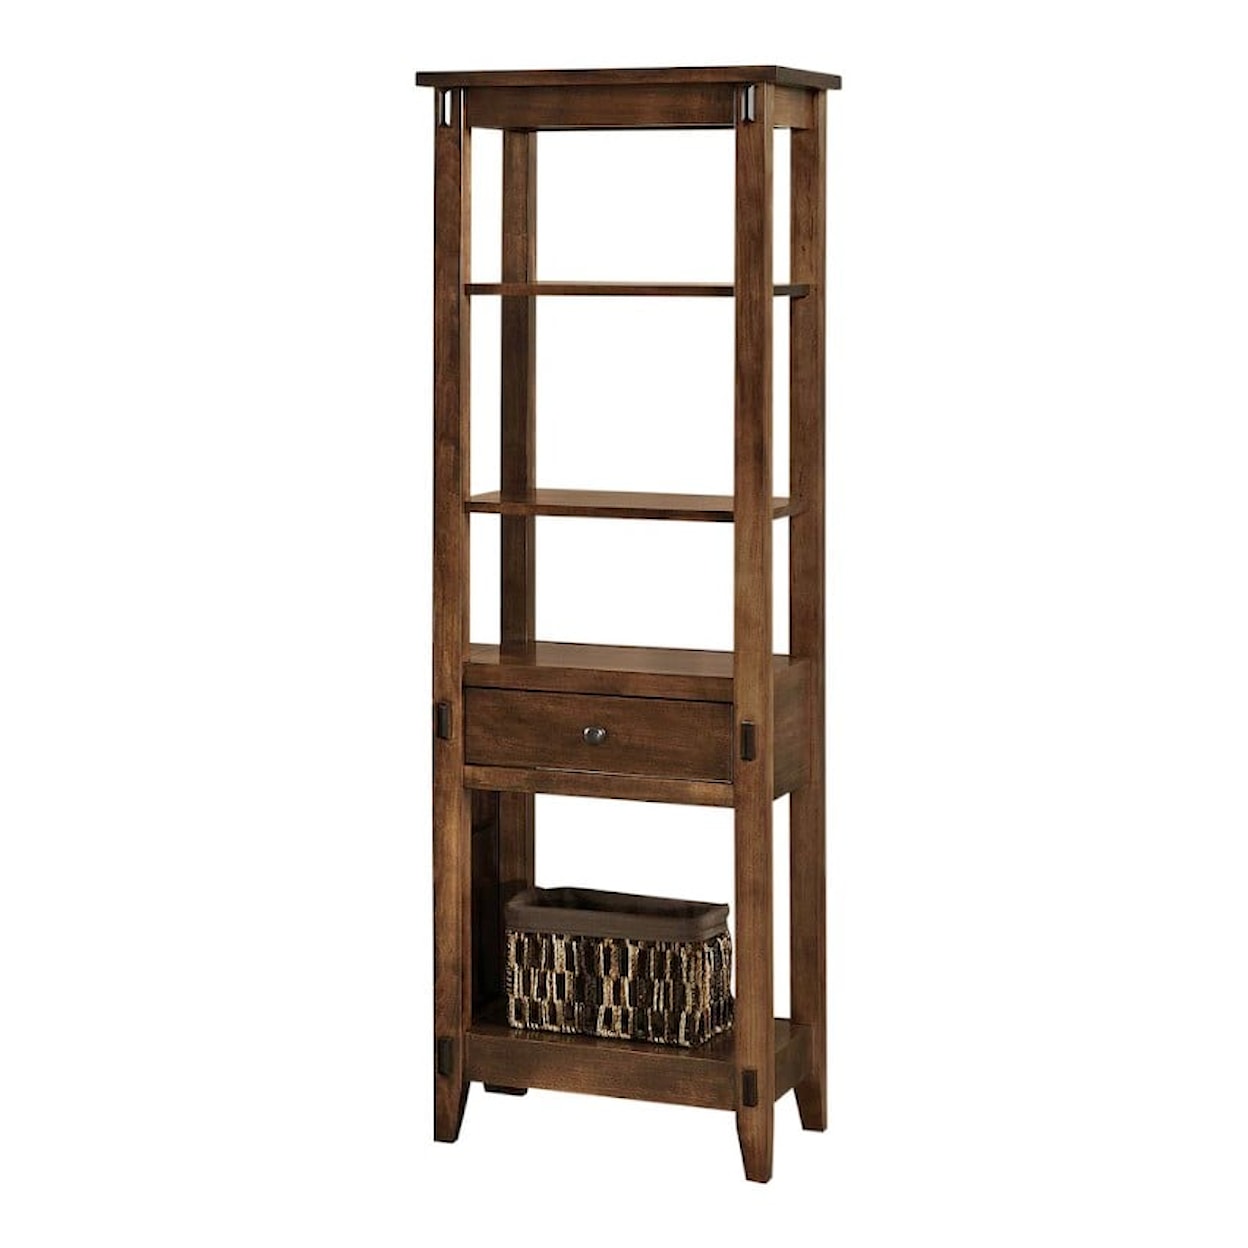 Archbold Furniture Amish Essentials Living Open Shelf Tower